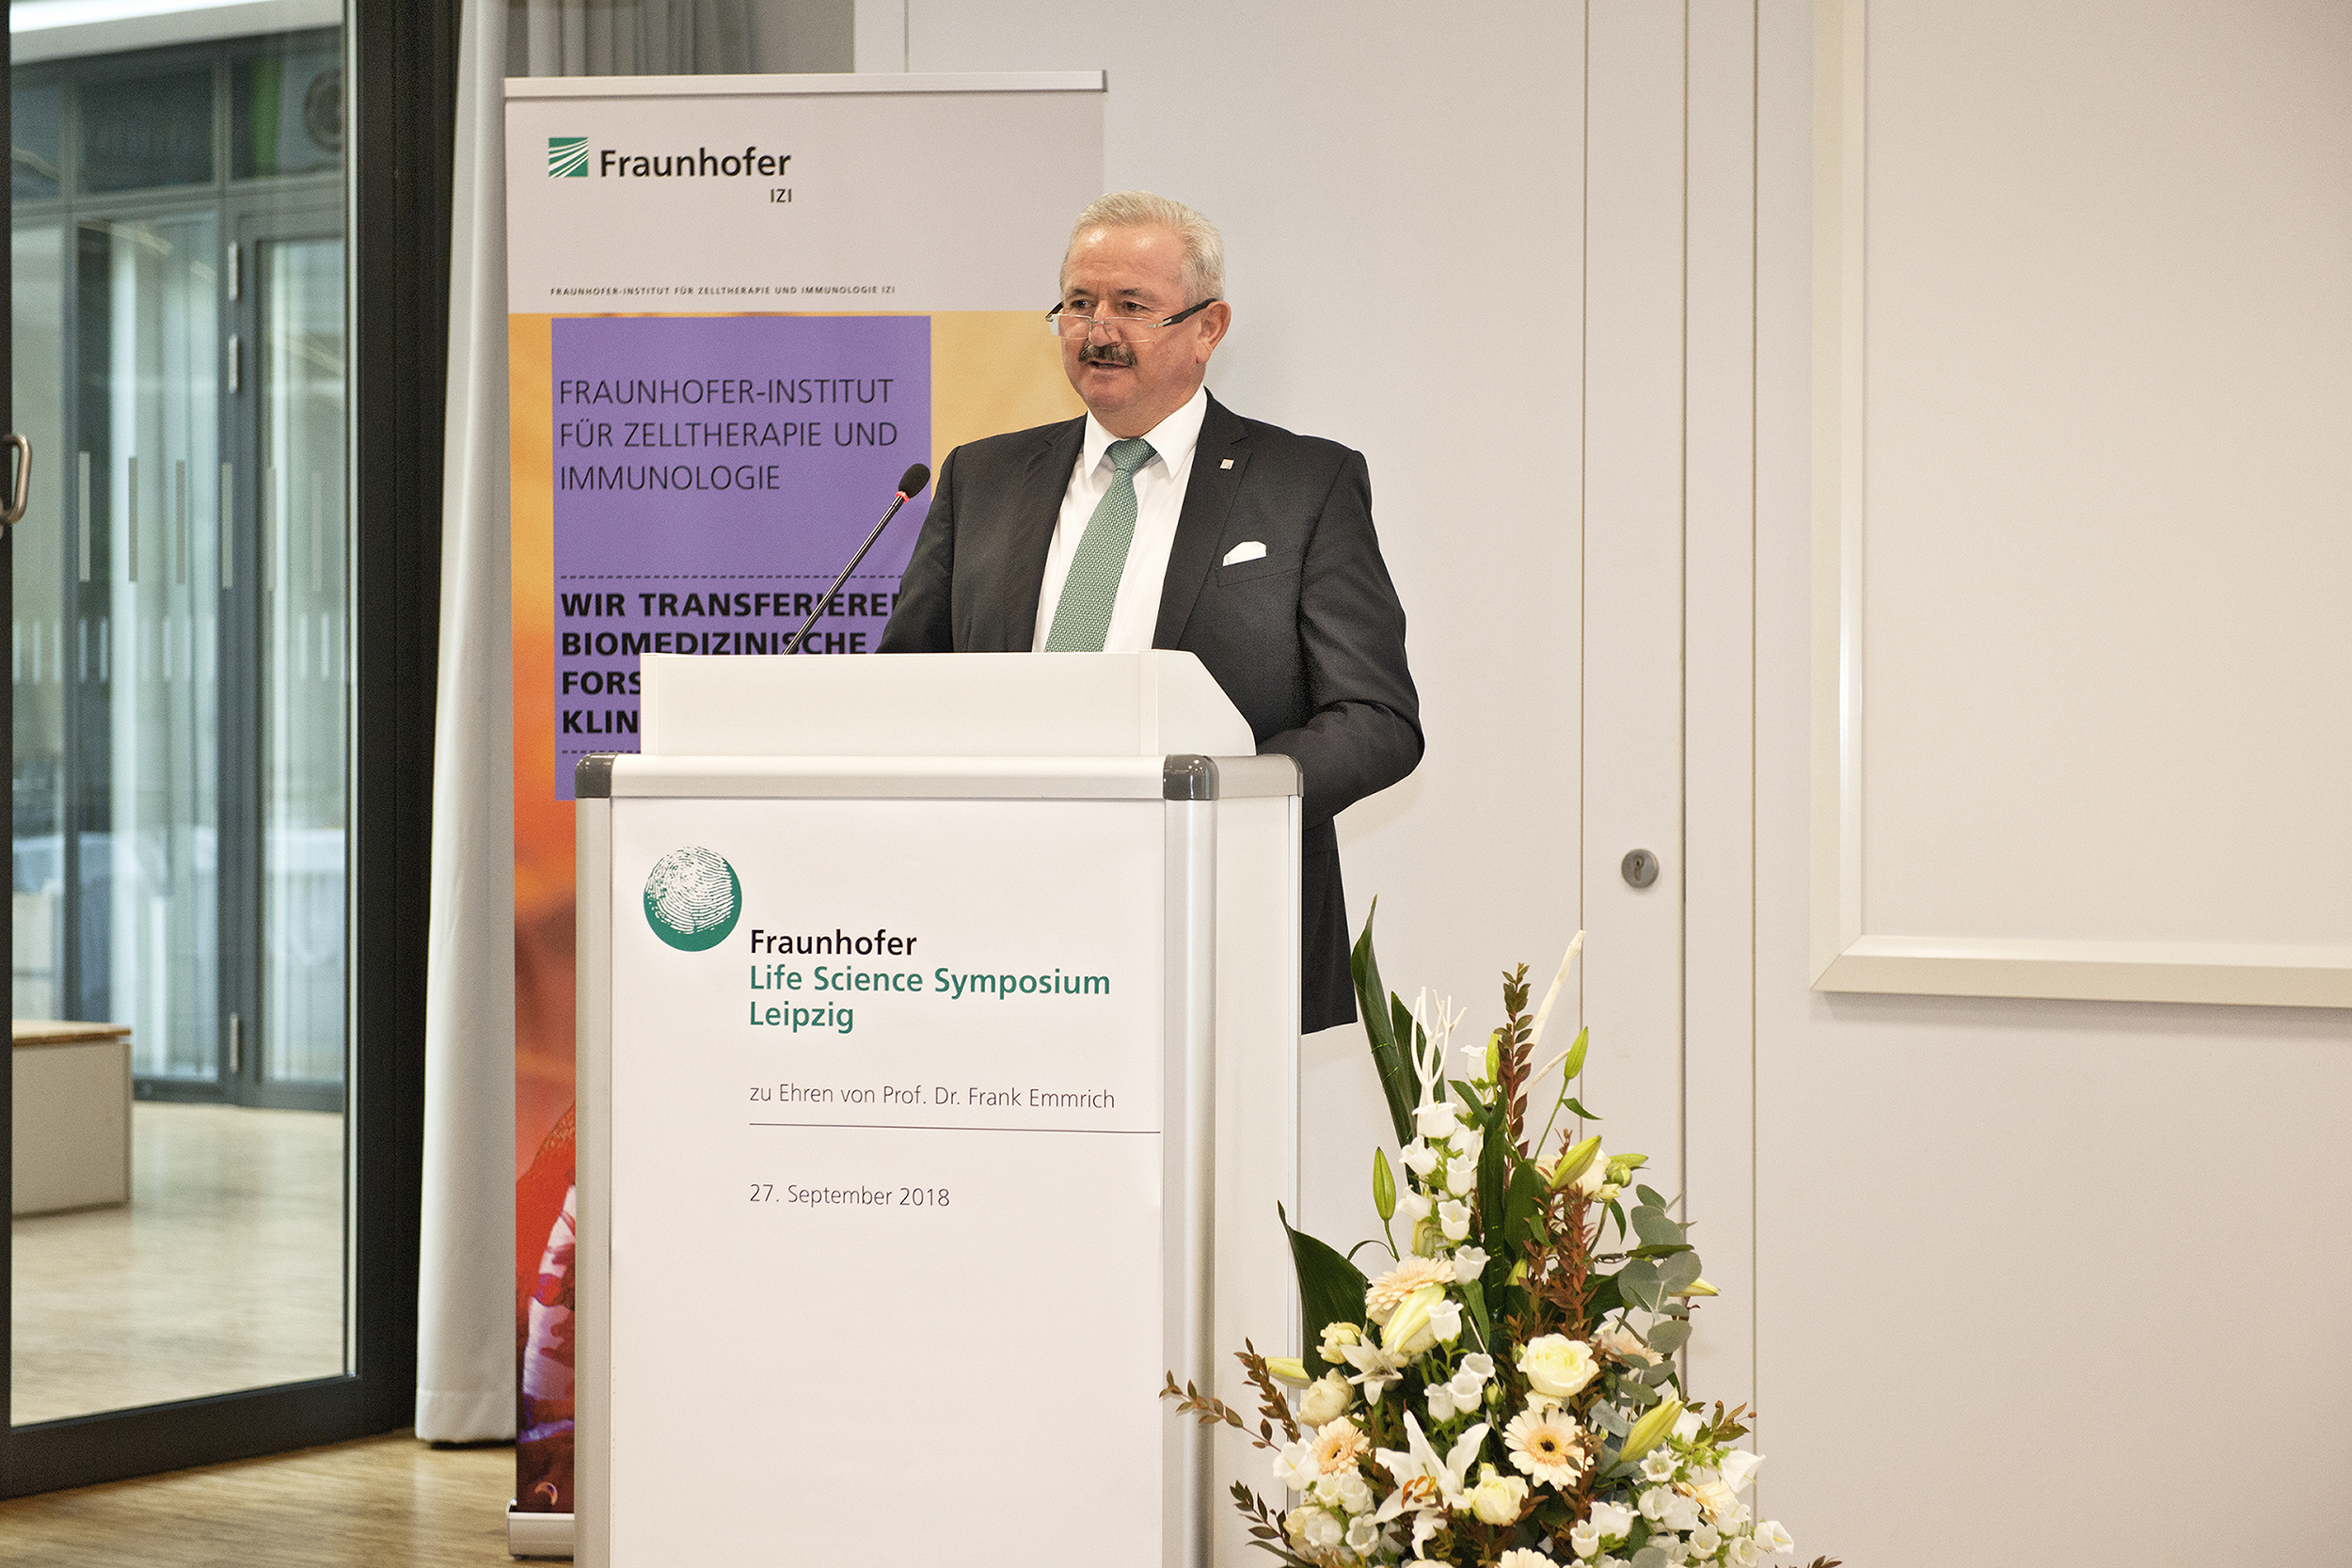 Professor Reimund Neugebauer, President of the Fraunhofer-Gesellschaft, gave a laudatory speech about the founder of the Fraunhofer IZI, Professor Frank Emmrich.